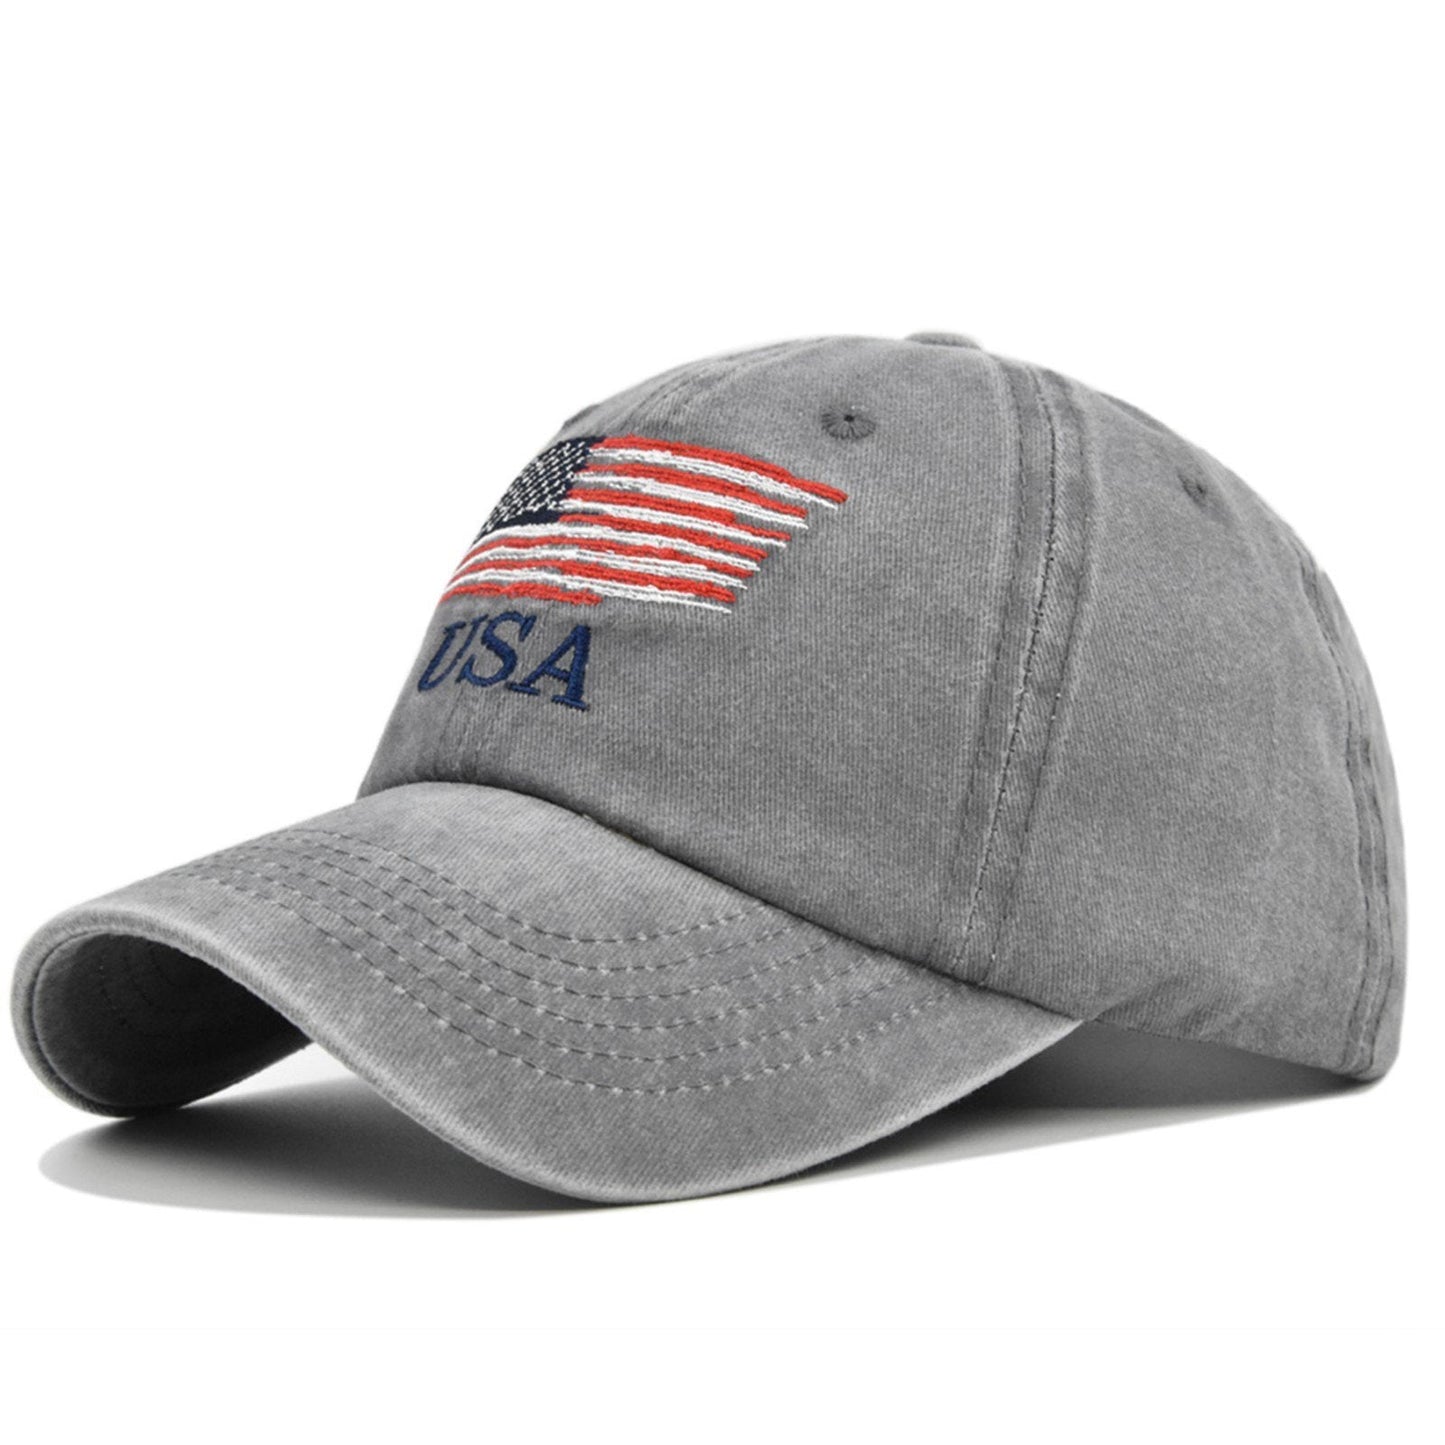 Vintage Baseball Hats For Men American Flag Patch Breathable Mesh Classic Baseball Caps Adjust Cotton Running Ball Hats